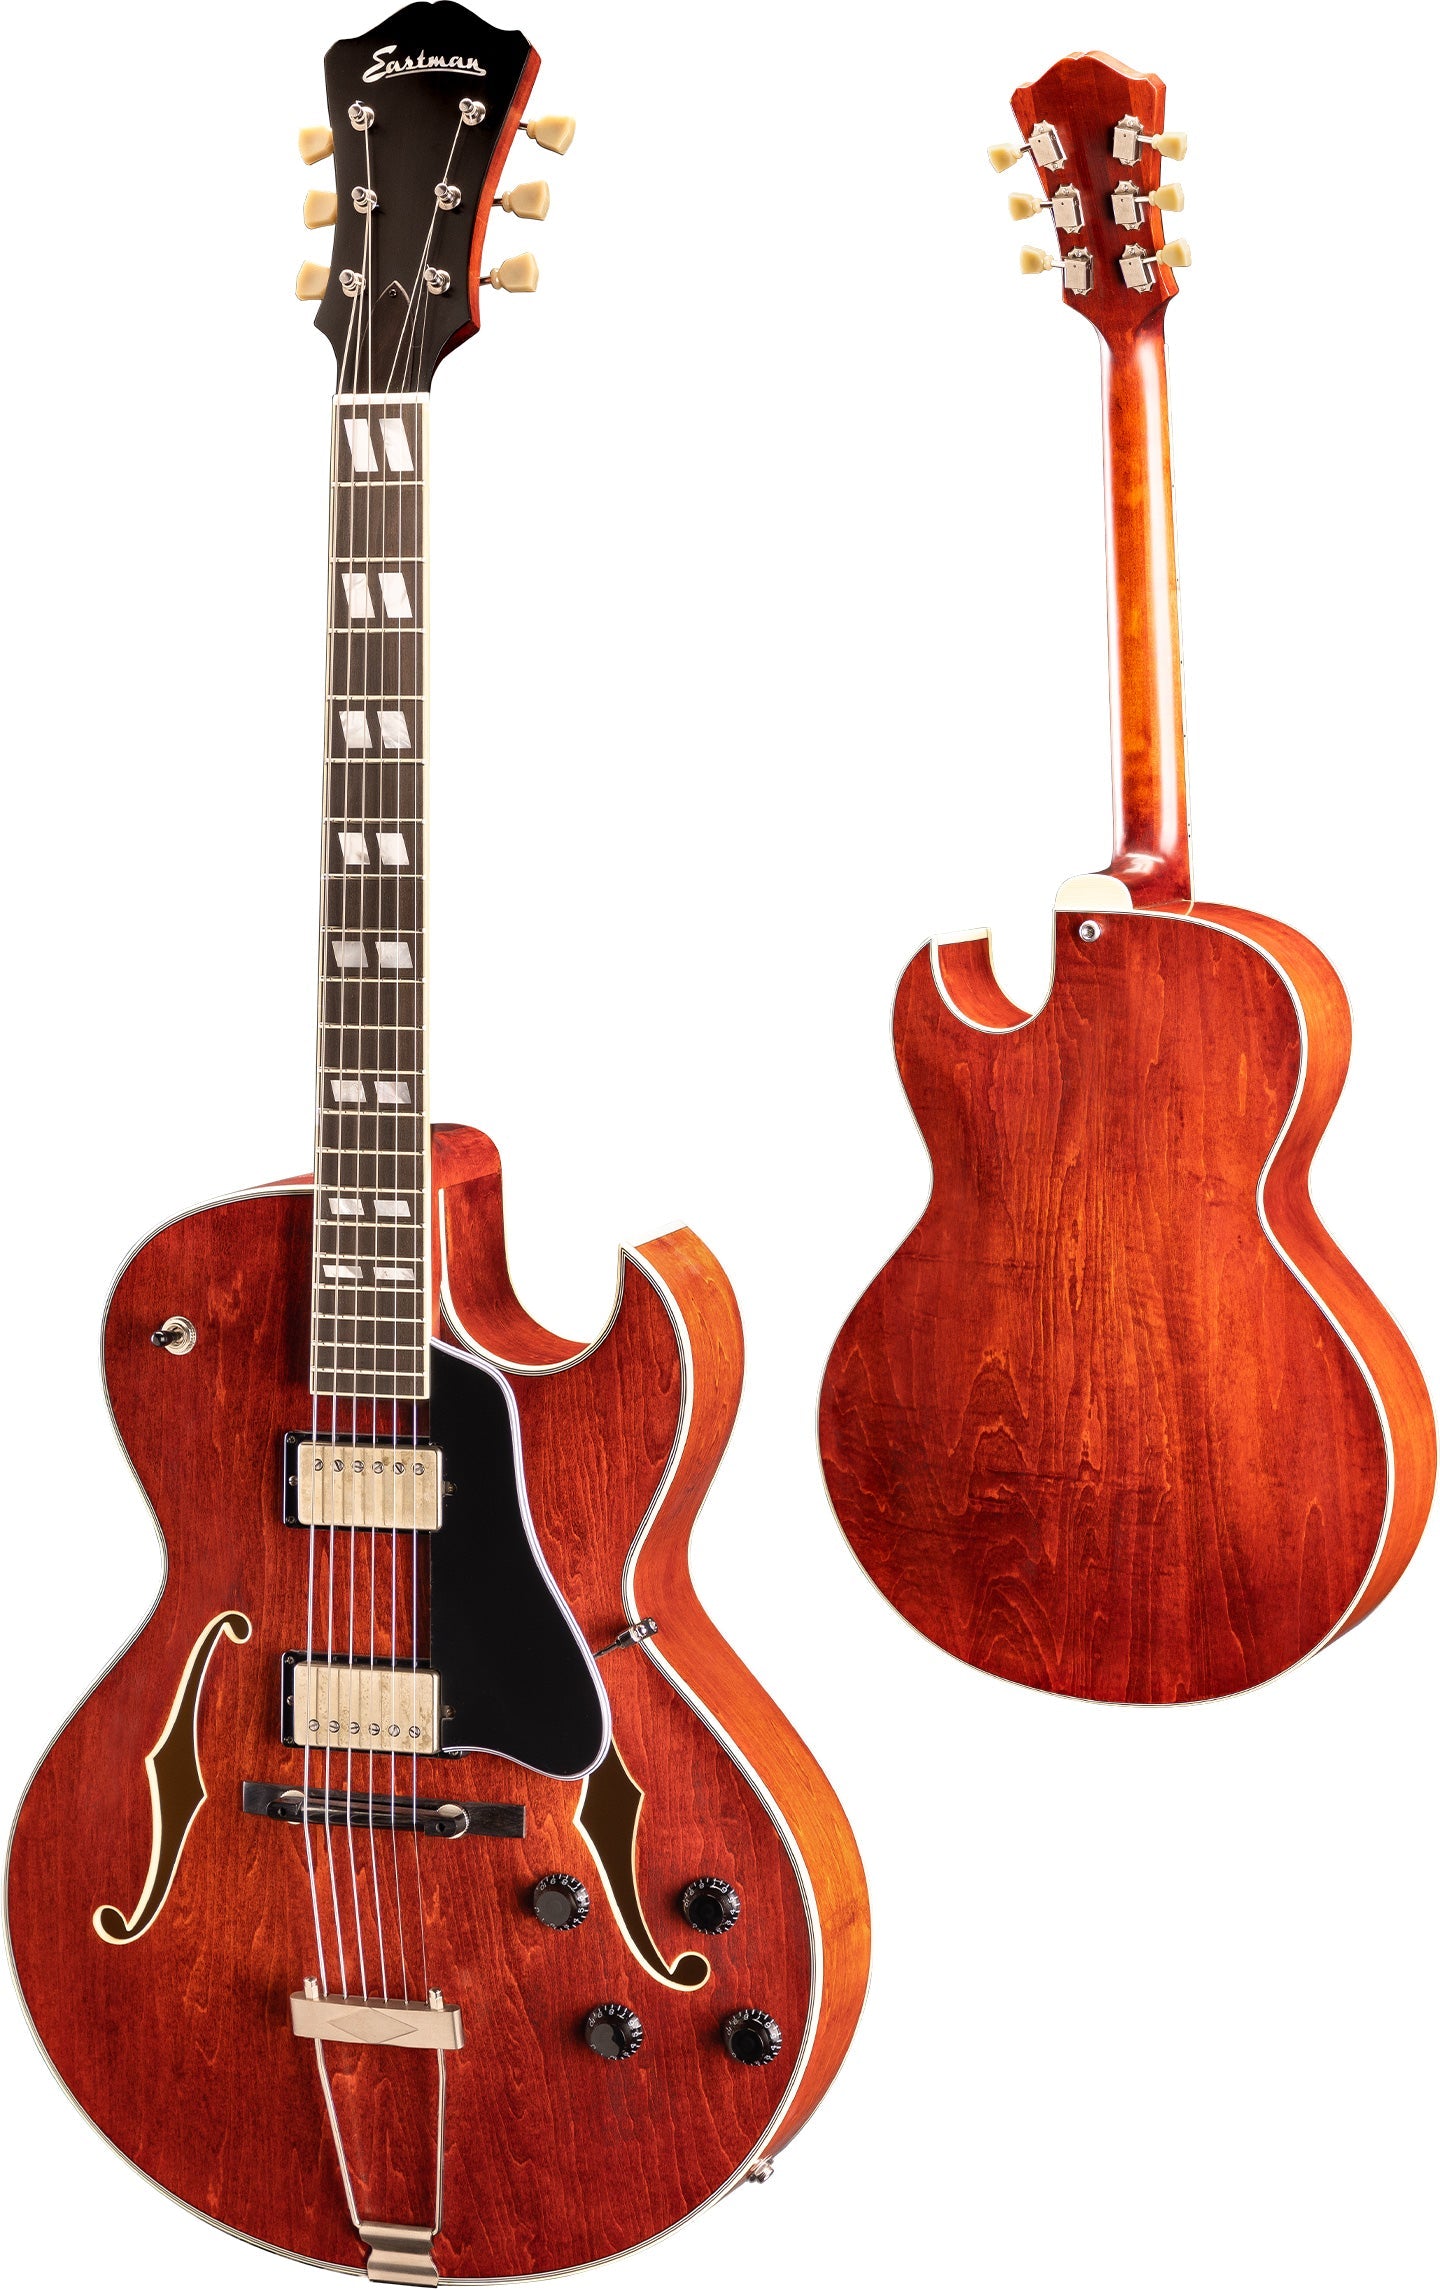 Eastman T49D/TV Vintage Classic, Electric Guitar for sale at Richards Guitars.